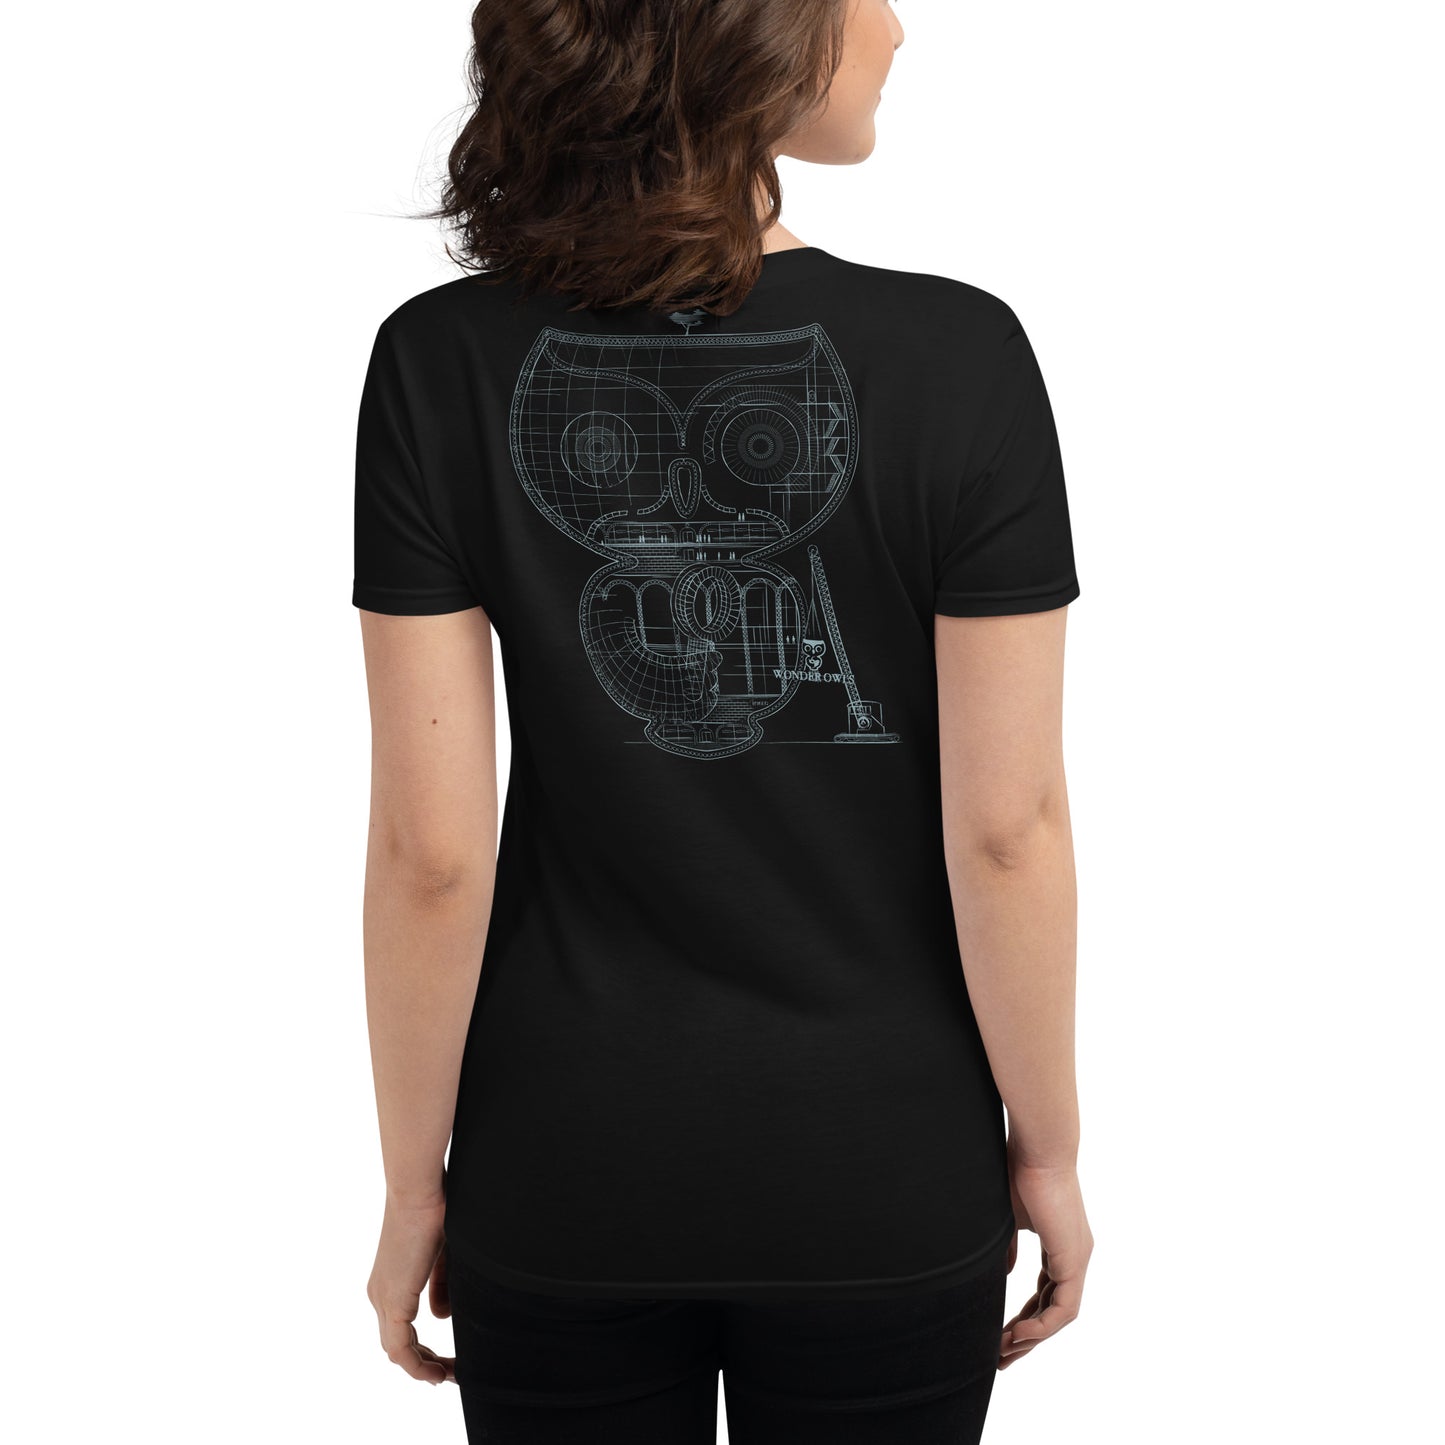 Owl Architecture Women's Short Sleeve T-shirt